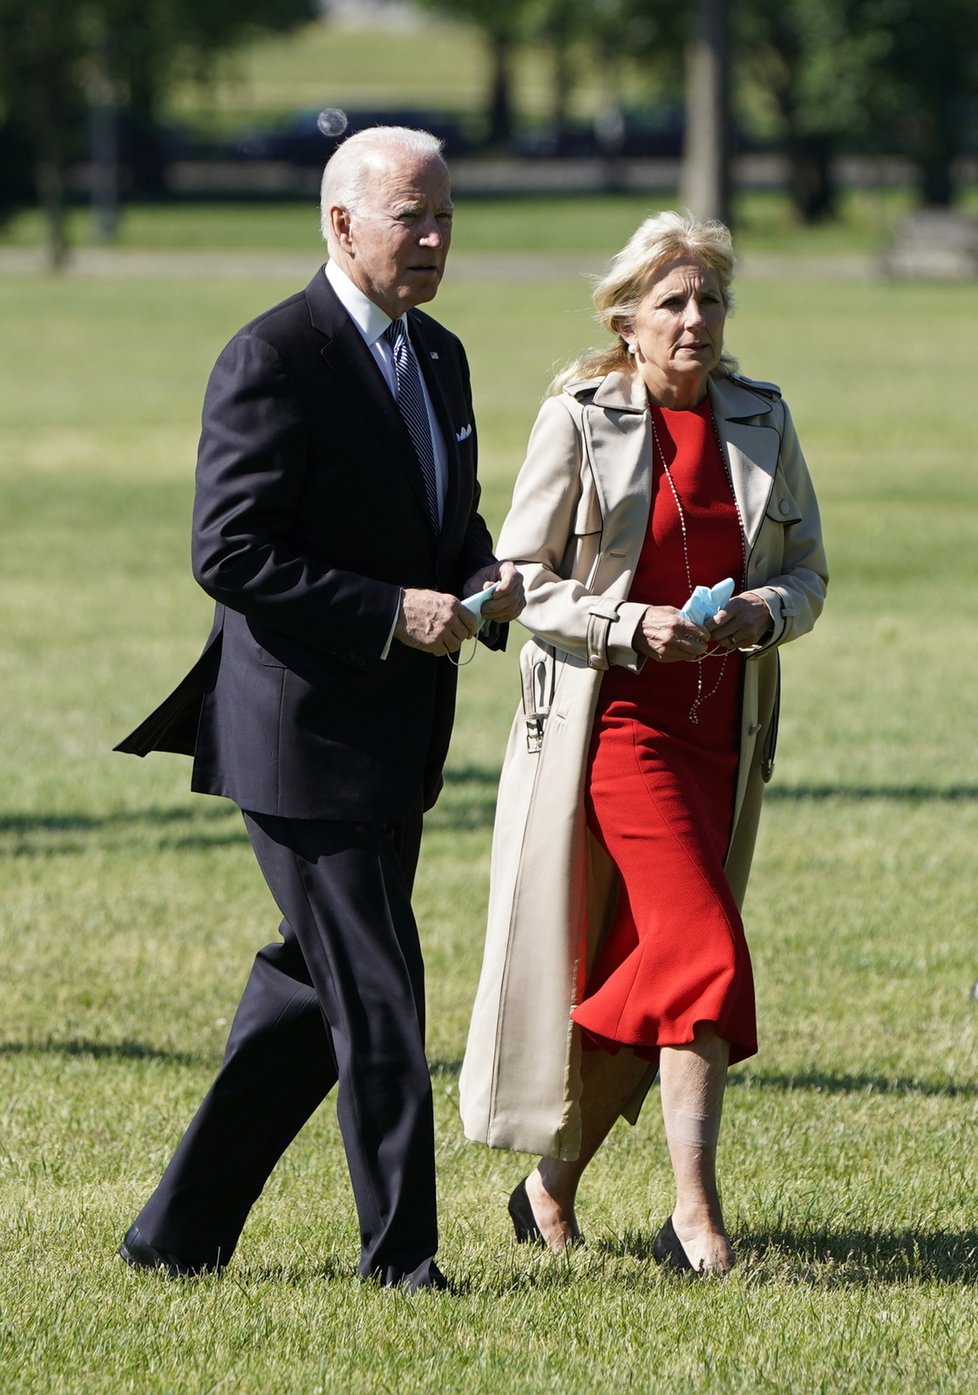 Prezident USA Joe Biden s manželkou Jill